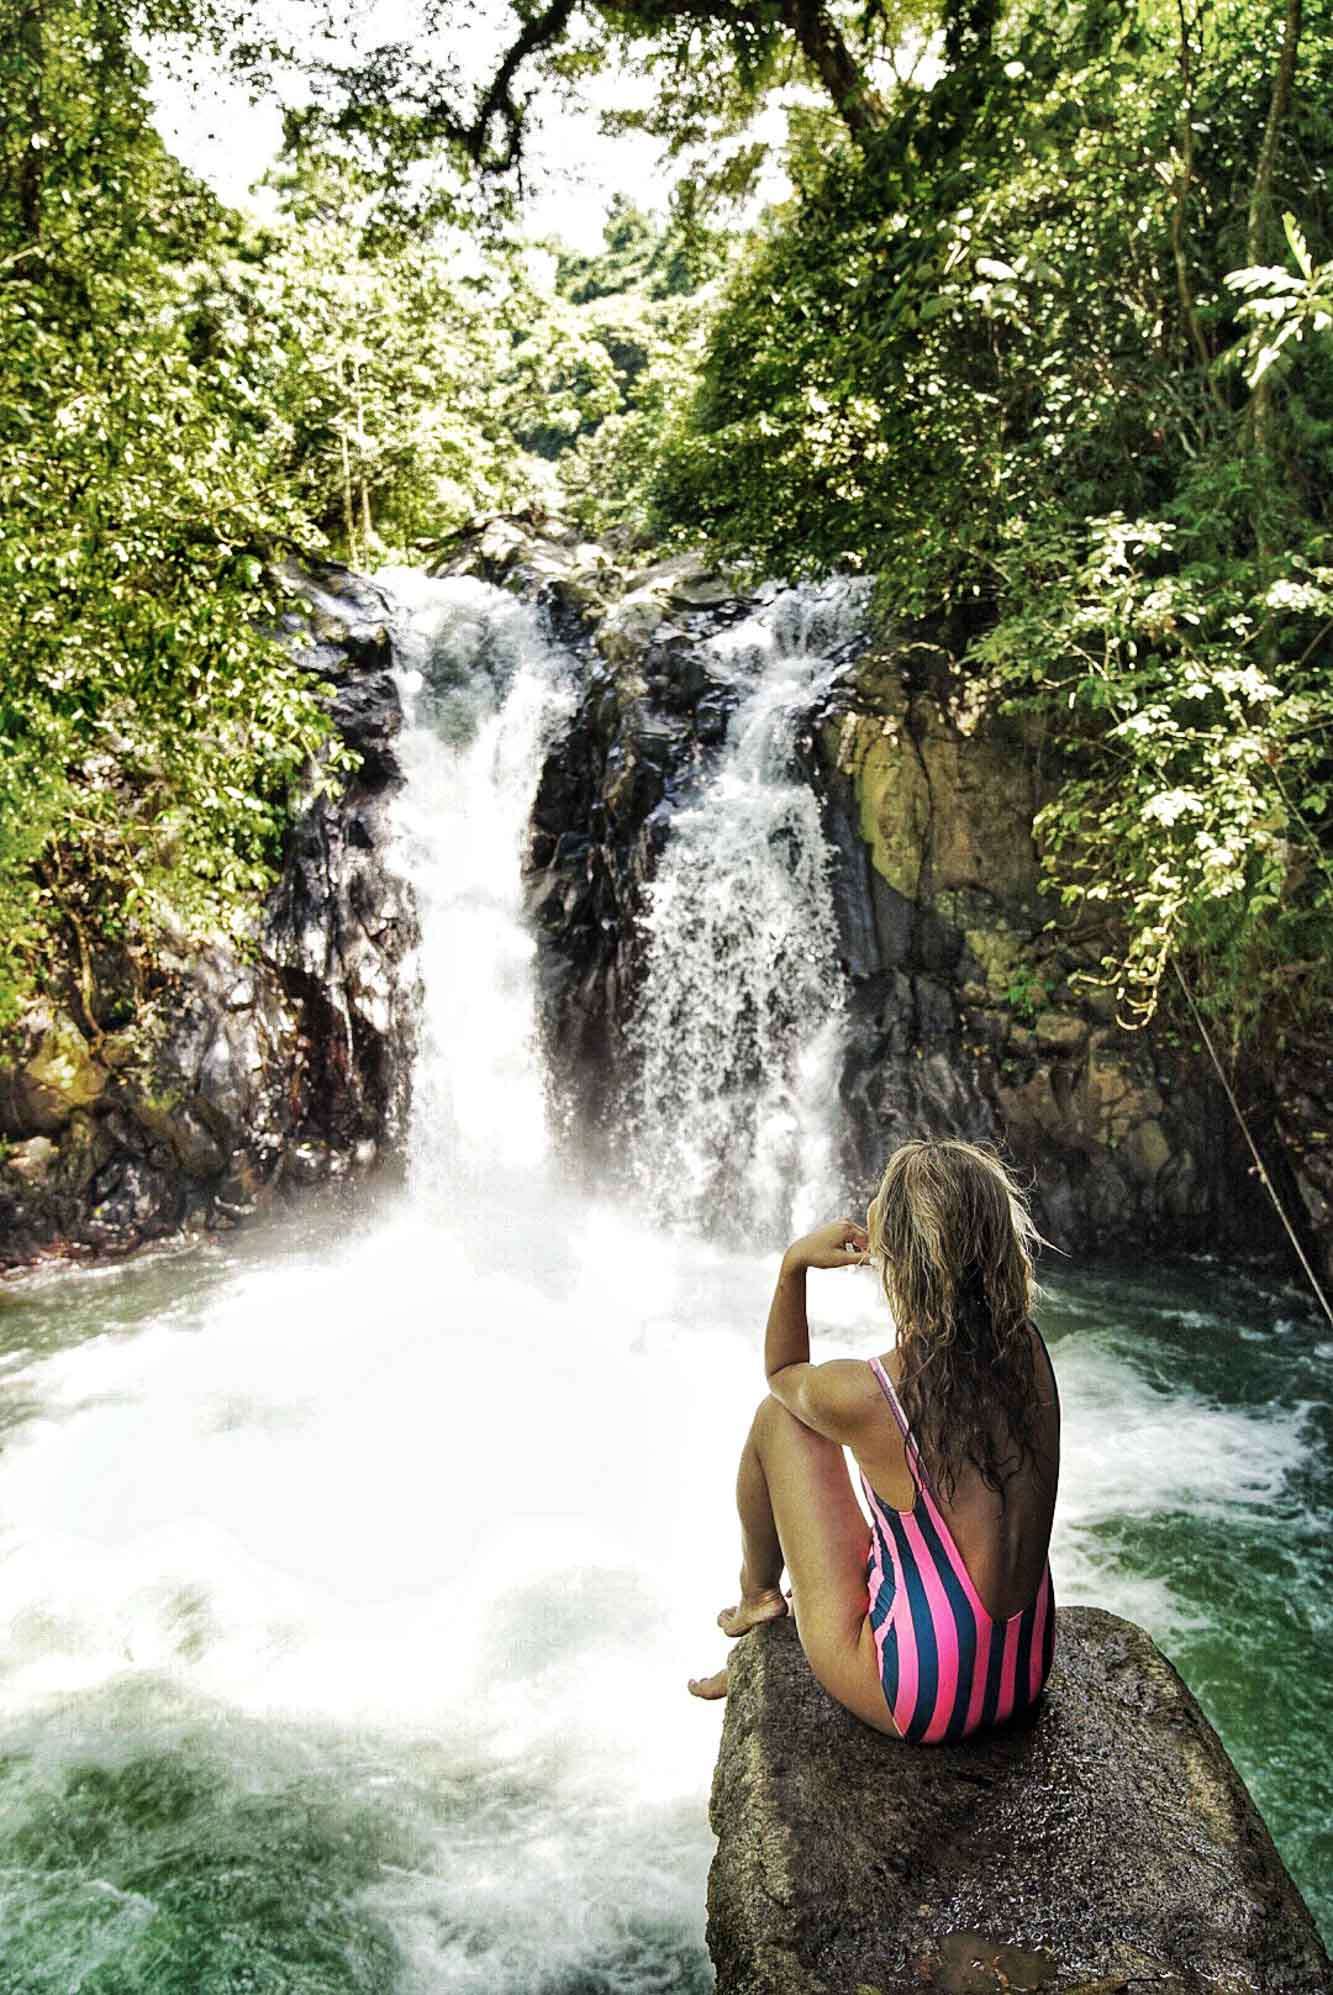 Aling Aling Waterfall - best waterfalls in Bali